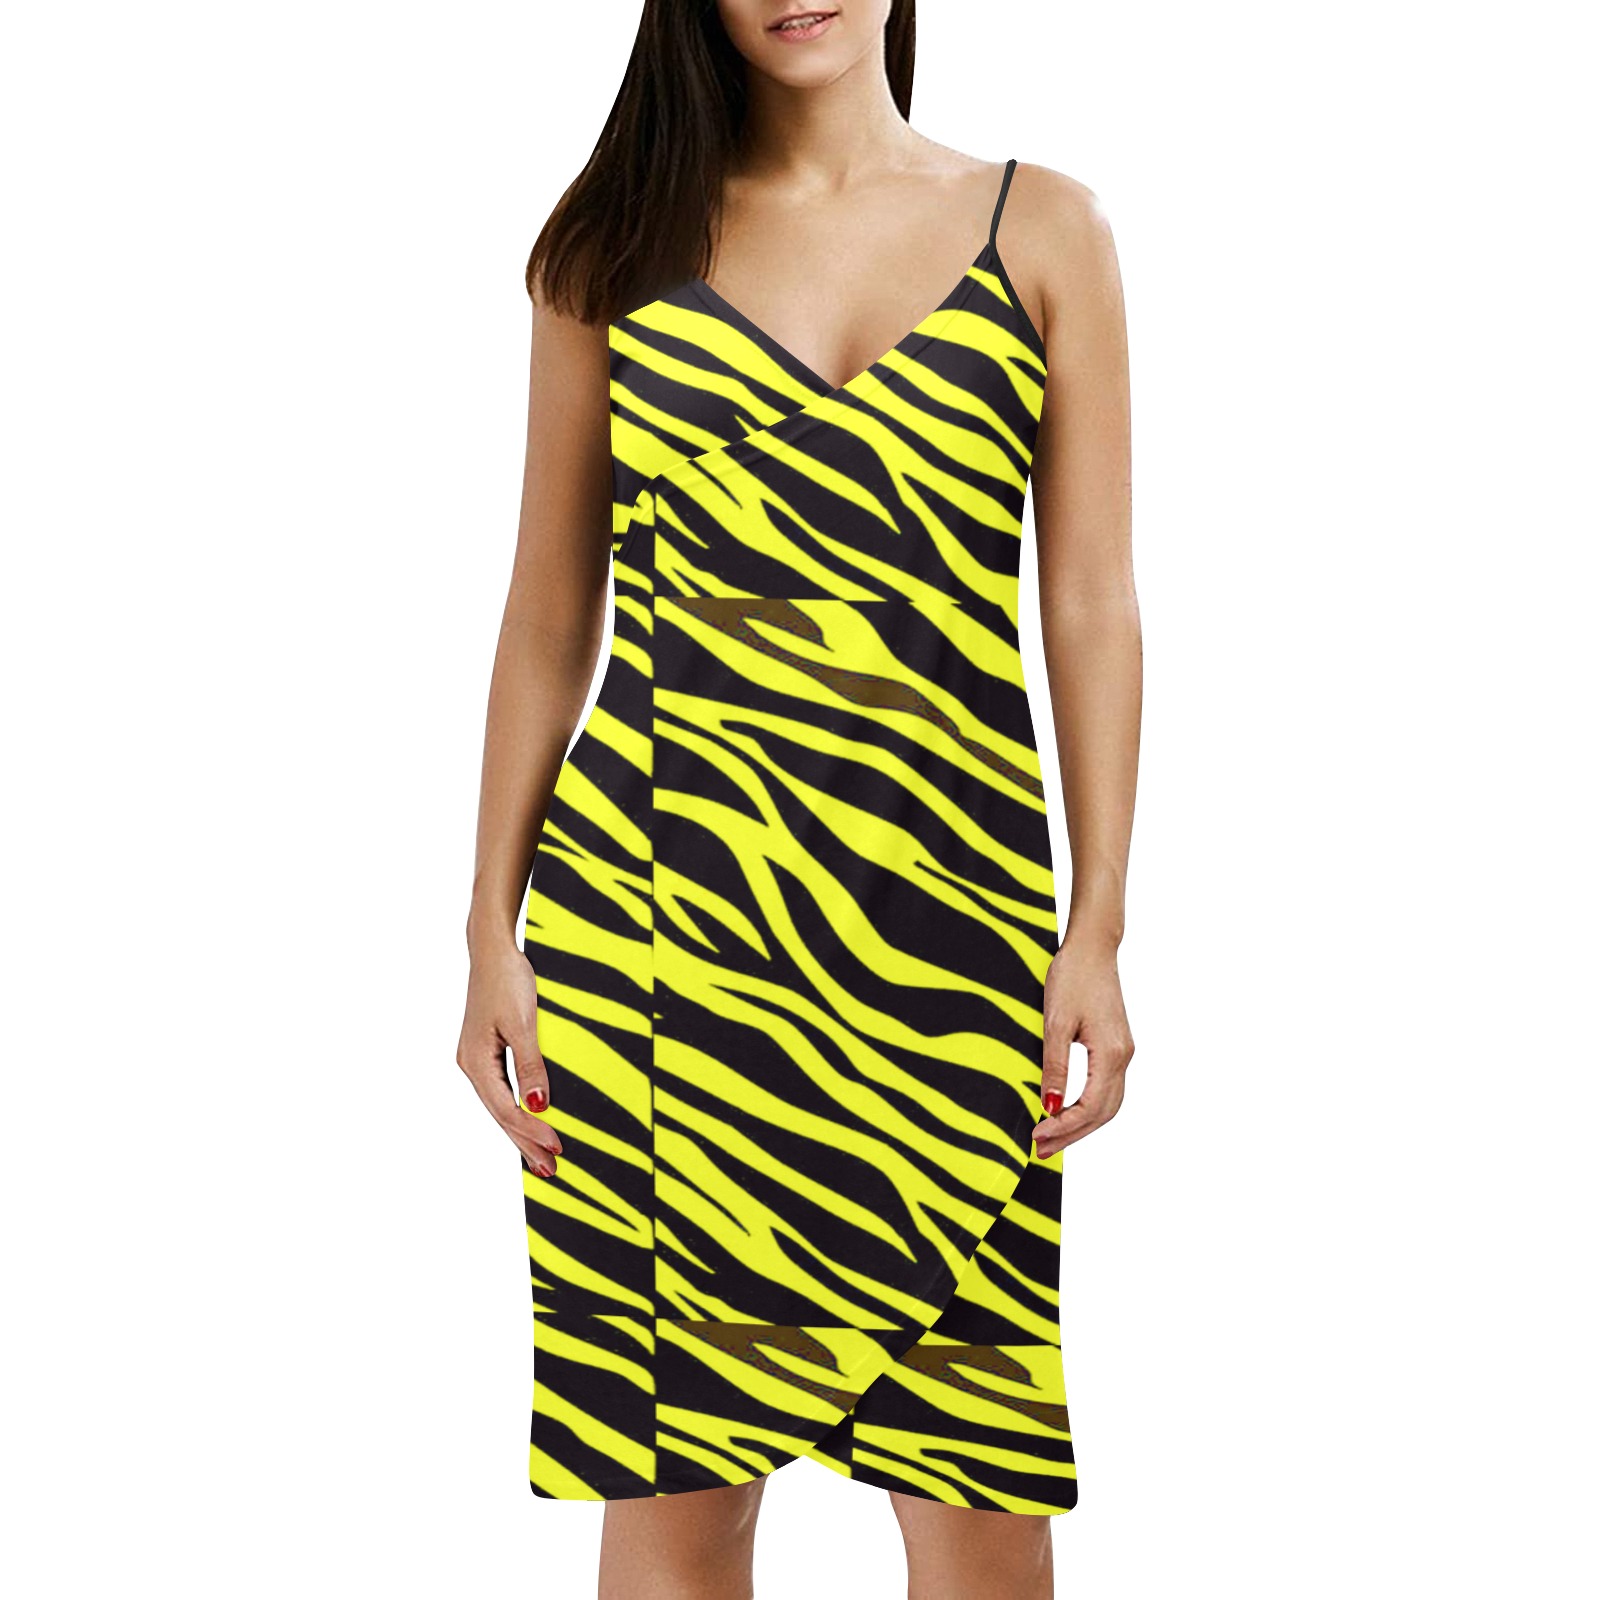 Neon Yellow Zebra Stripes Spaghetti Strap Backless Beach Cover Up Dress (Model D65)